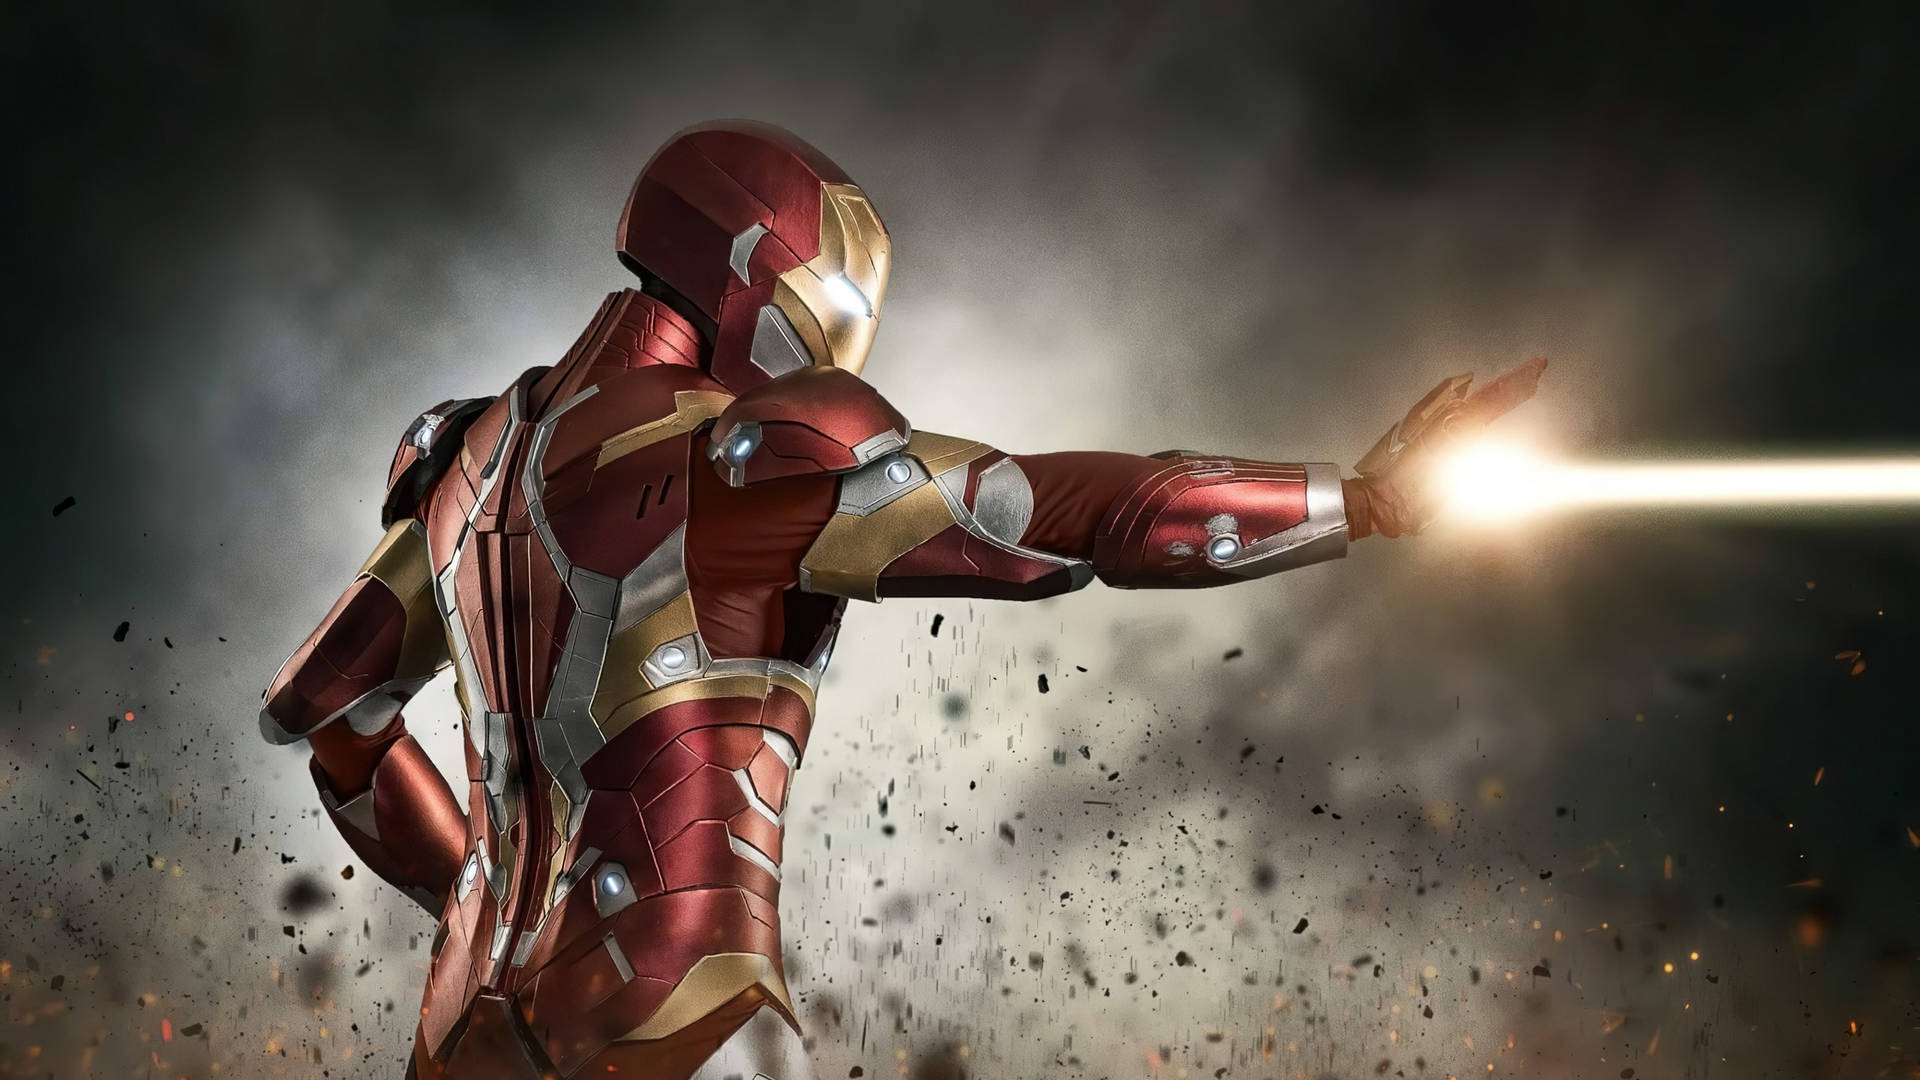 Fire Blast Iron Man Superhero Wallpaper